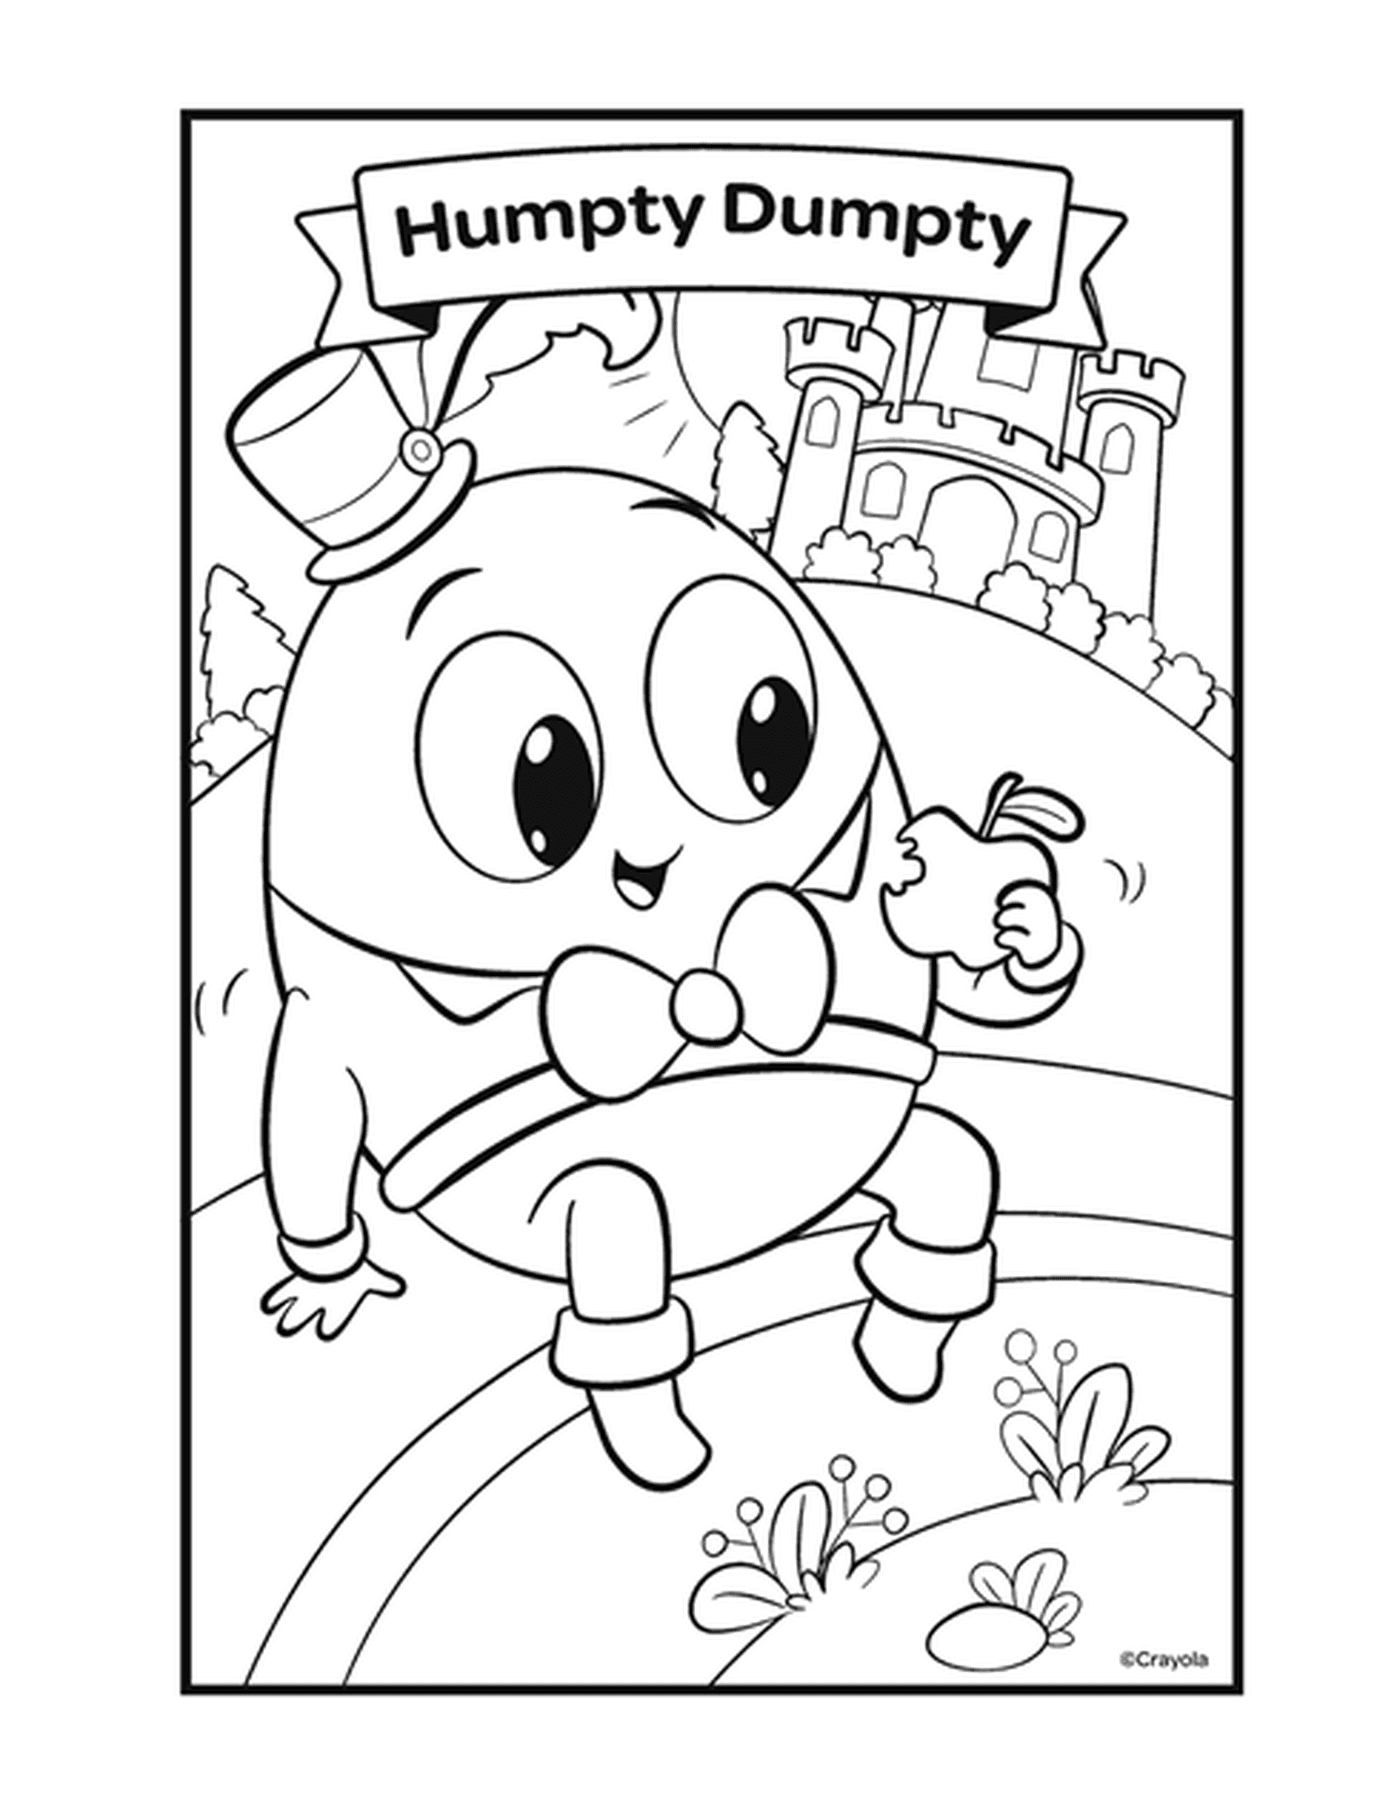  Фигура Humpty Dumpty с персонажем в форме яйцеклетки 